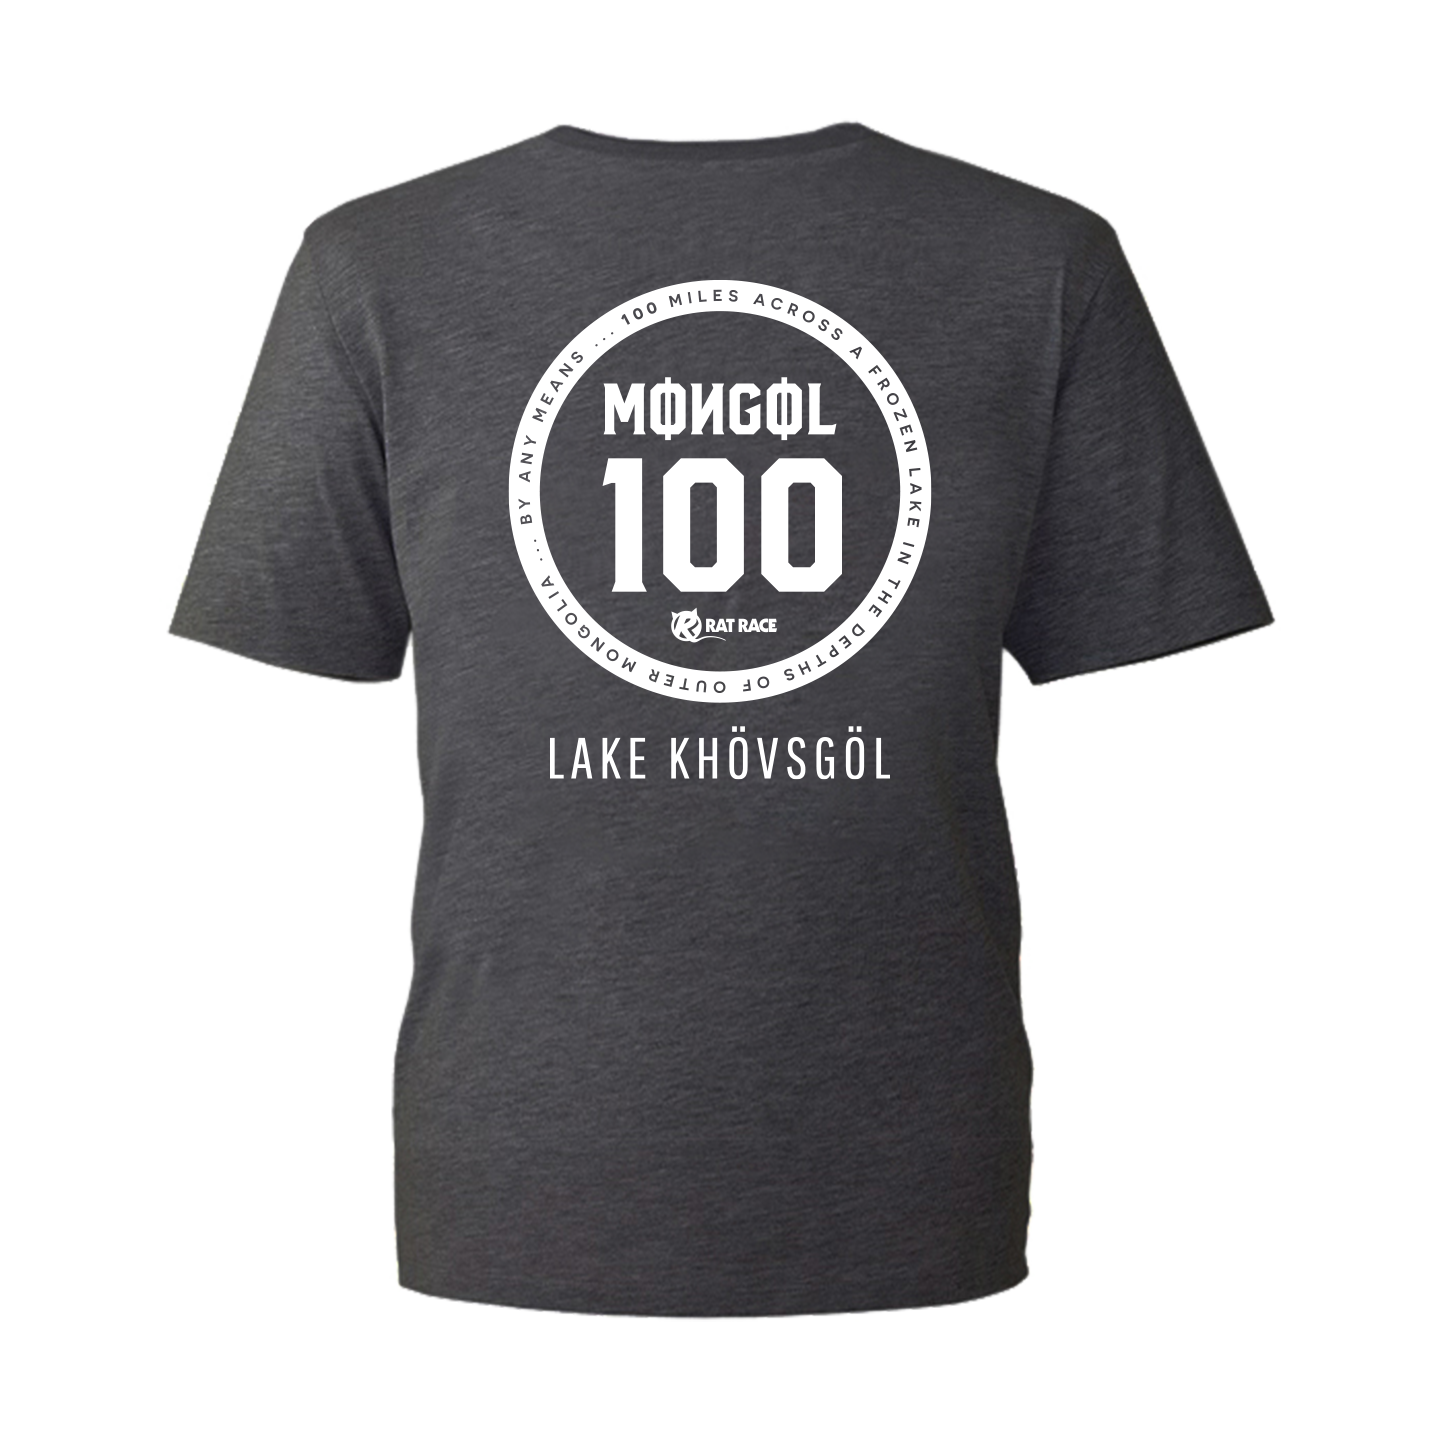 Mongol 100 - Dark Grey - T-shirt